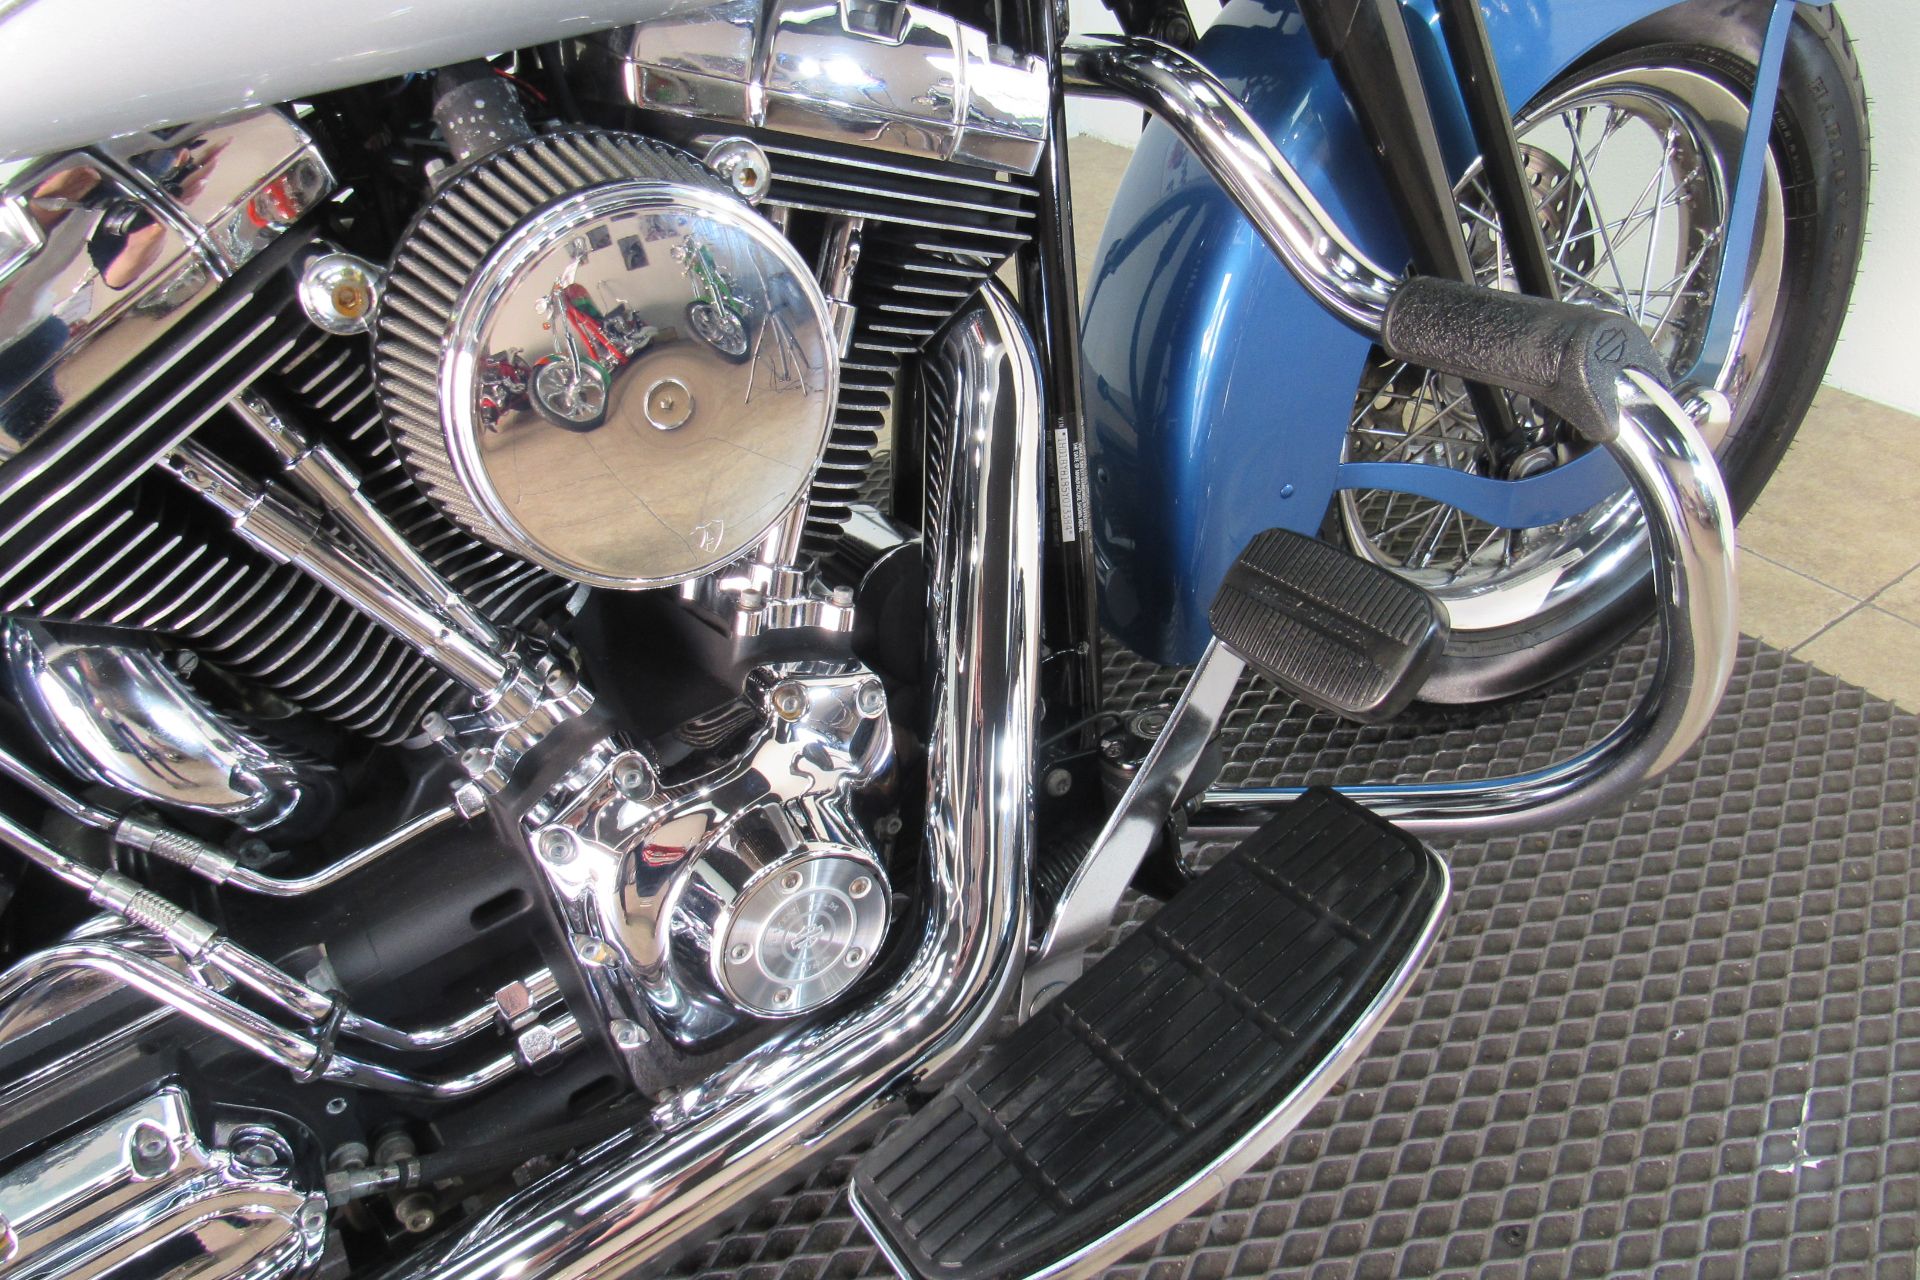 2005 Harley-Davidson FLSTSC/FLSTSCI Softail® Springer® Classic in Temecula, California - Photo 13